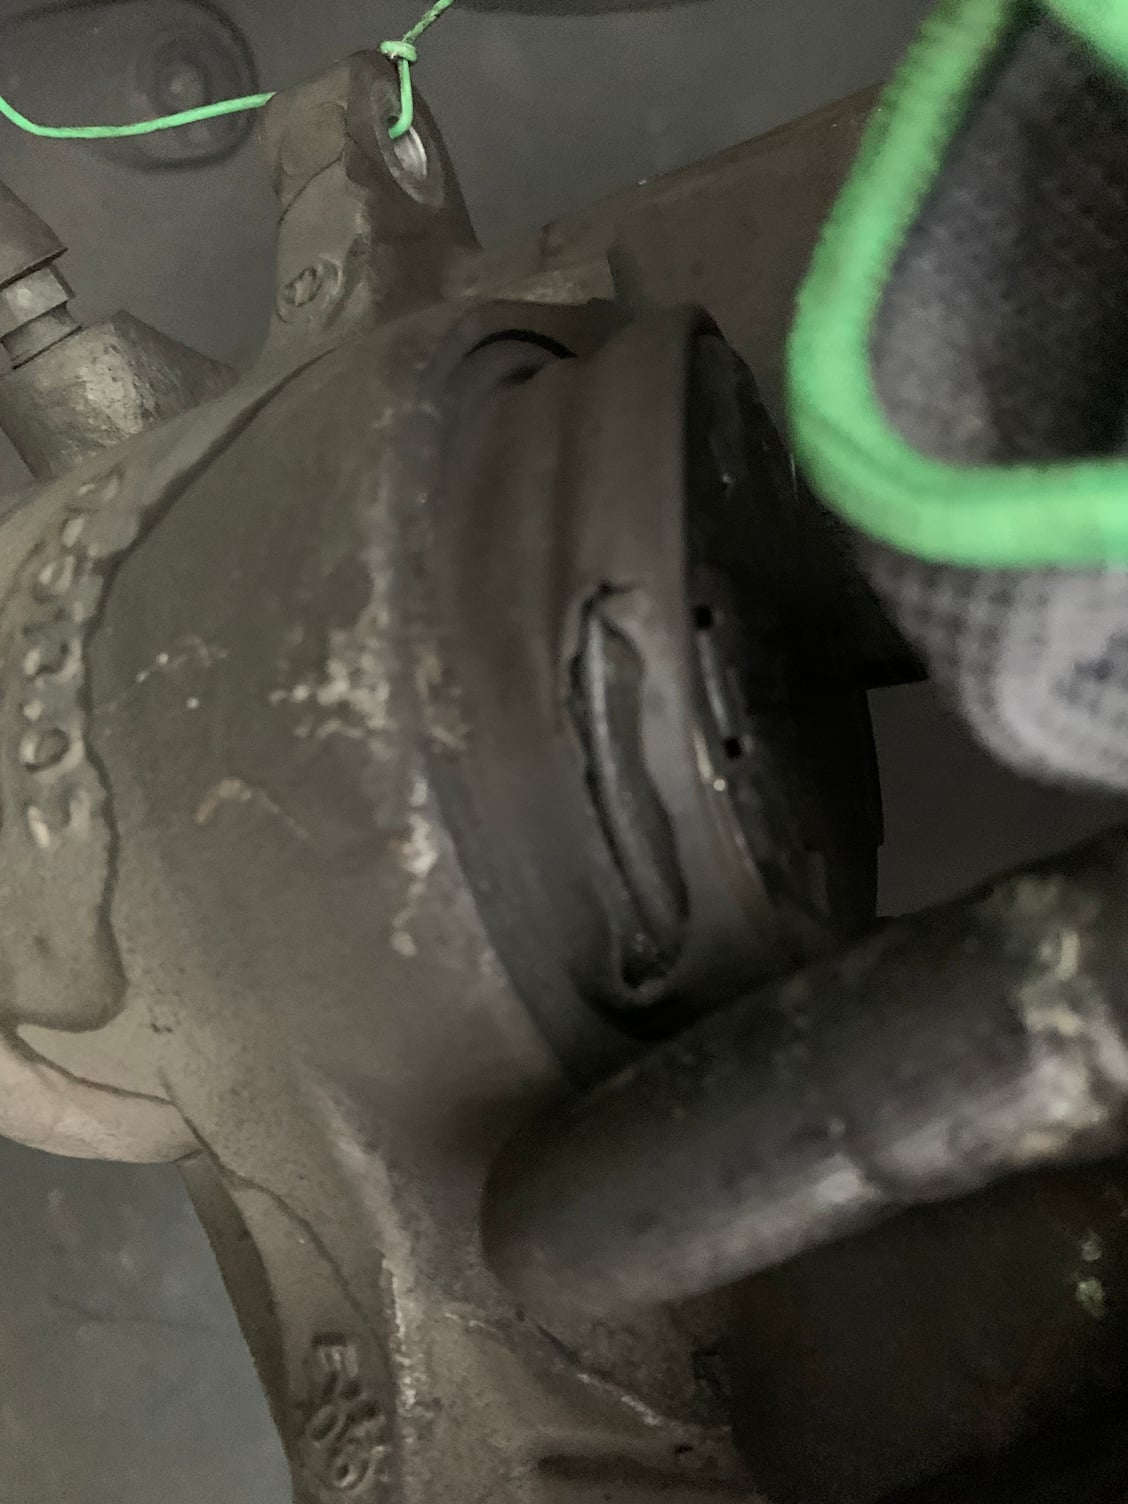 What To Do When brake caliper bolt stuck? - Carlson Quality Brake Parts